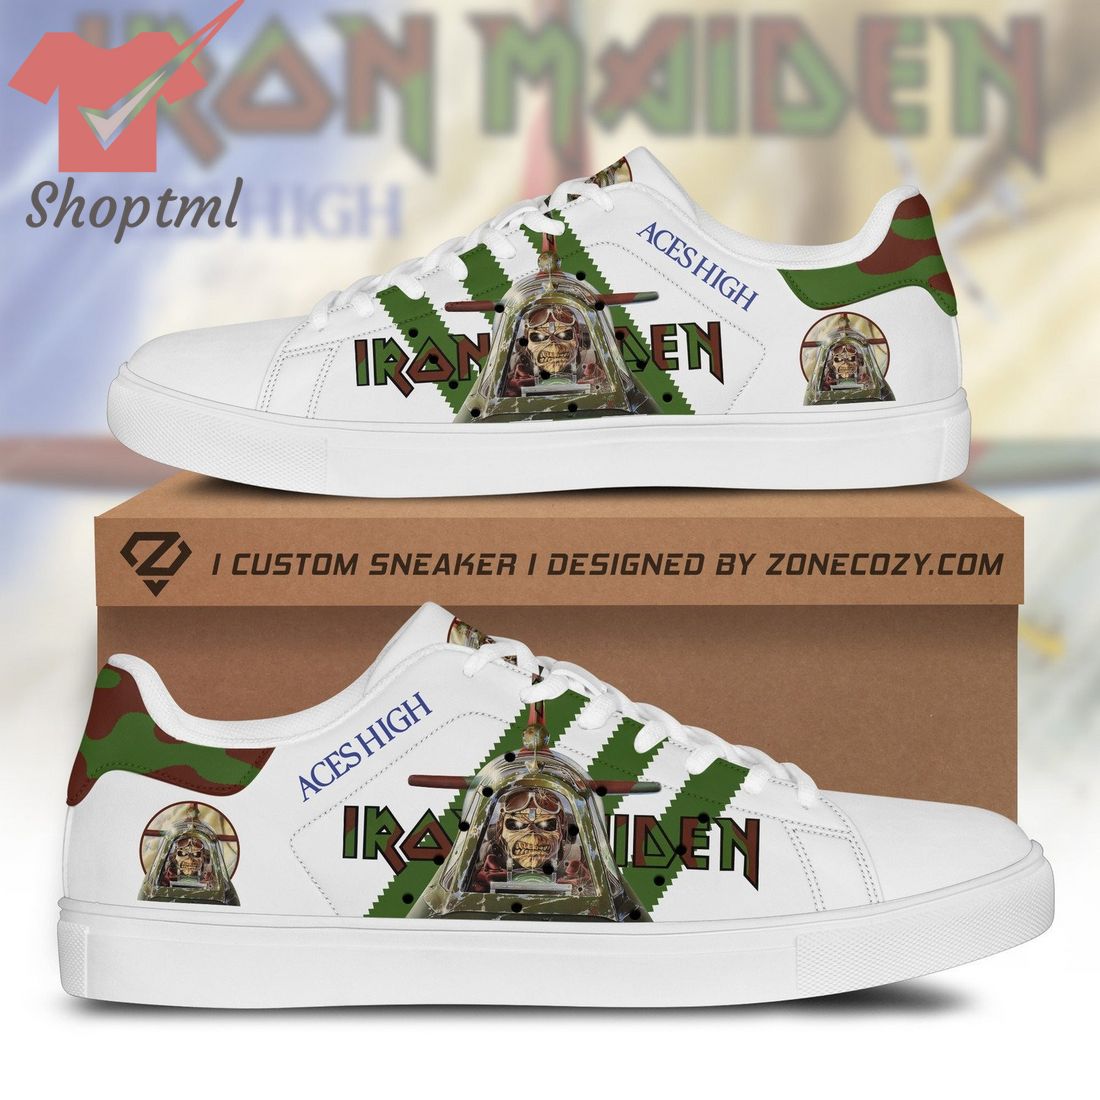 Iron Maiden aces high stan smith adidas shoes